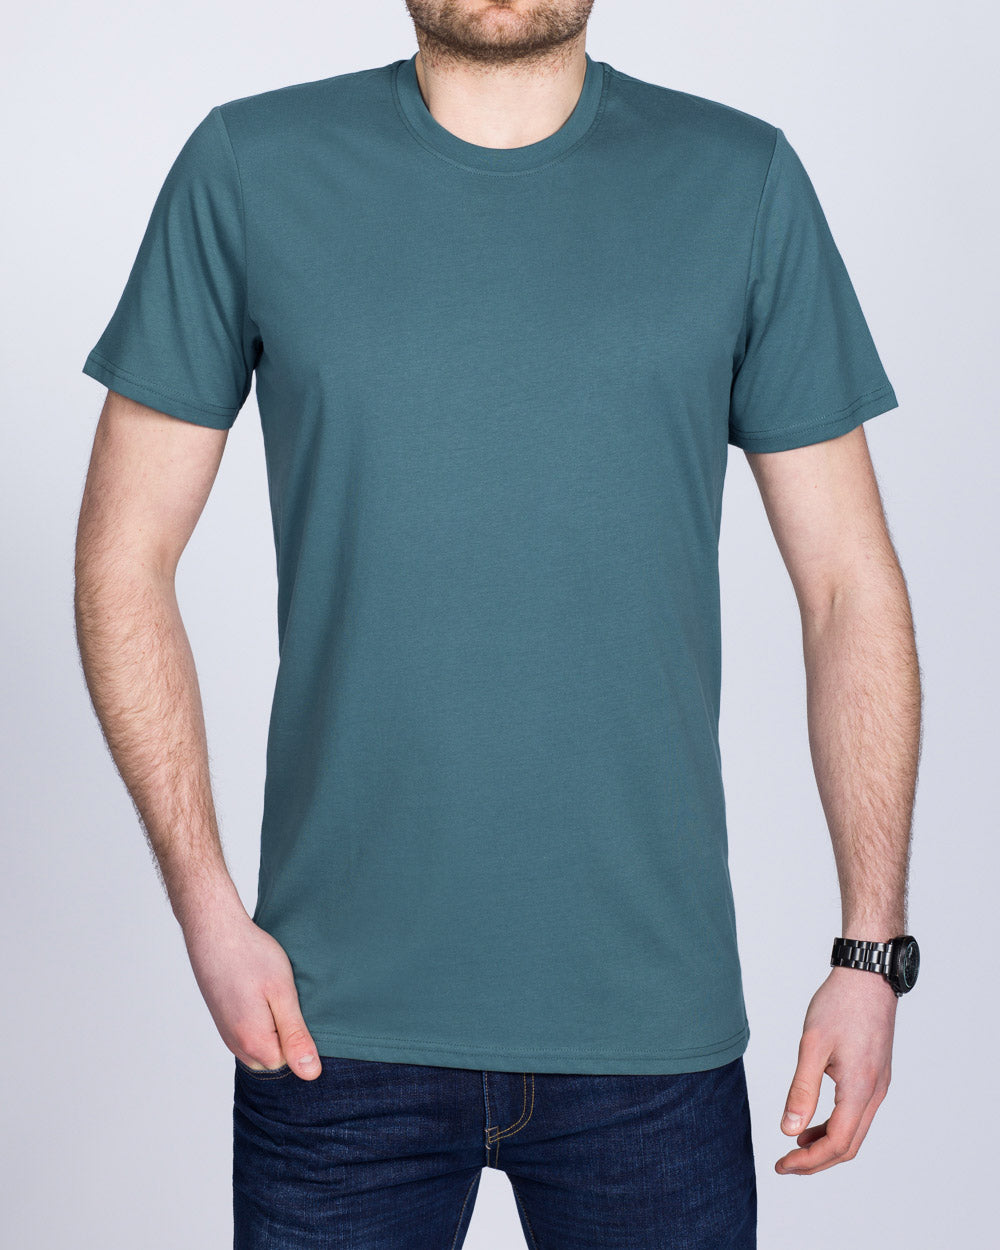 Girav Sydney Tall T-Shirt (metal blue)